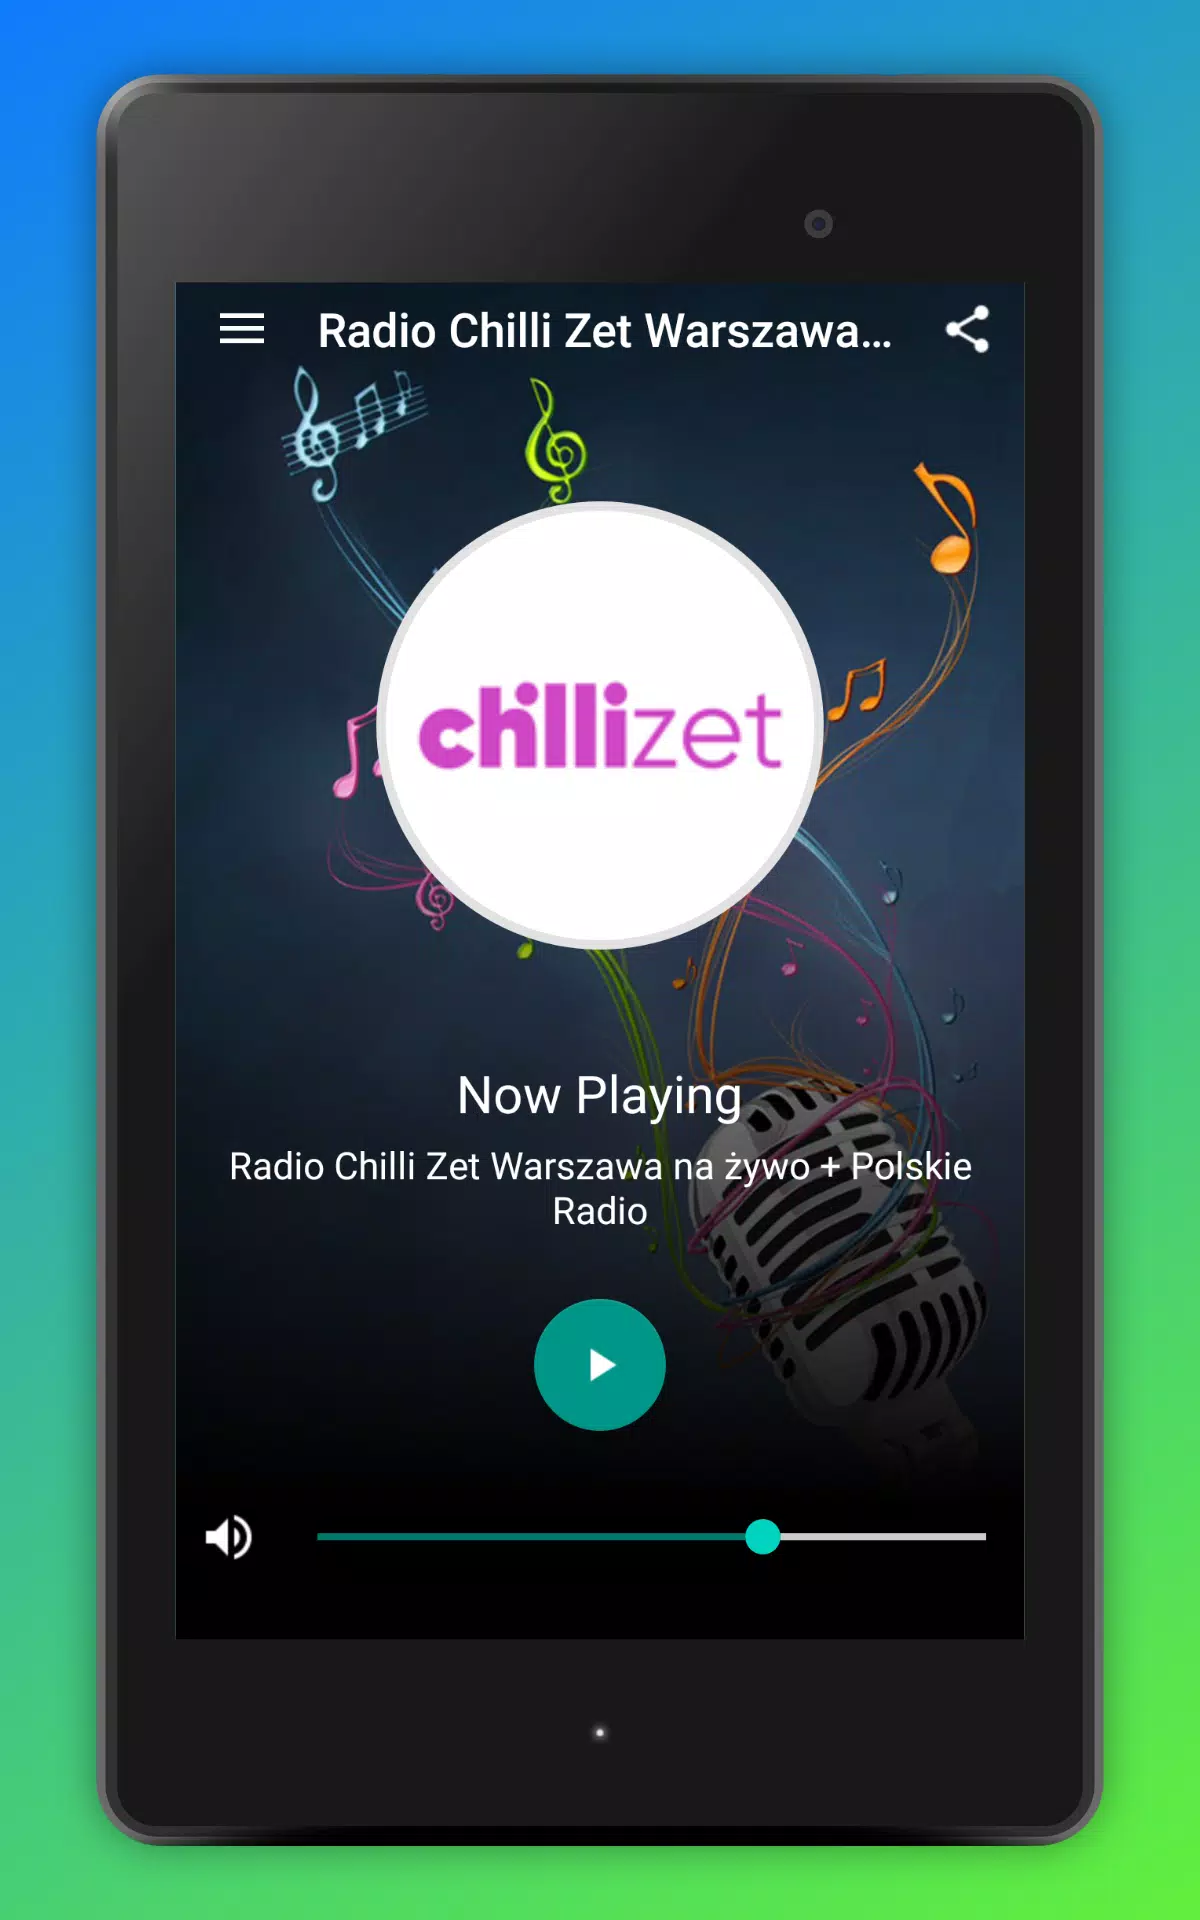 Radio Chilli Zet Warszawa na żywo + Polskie Radio APK untuk Unduhan Android